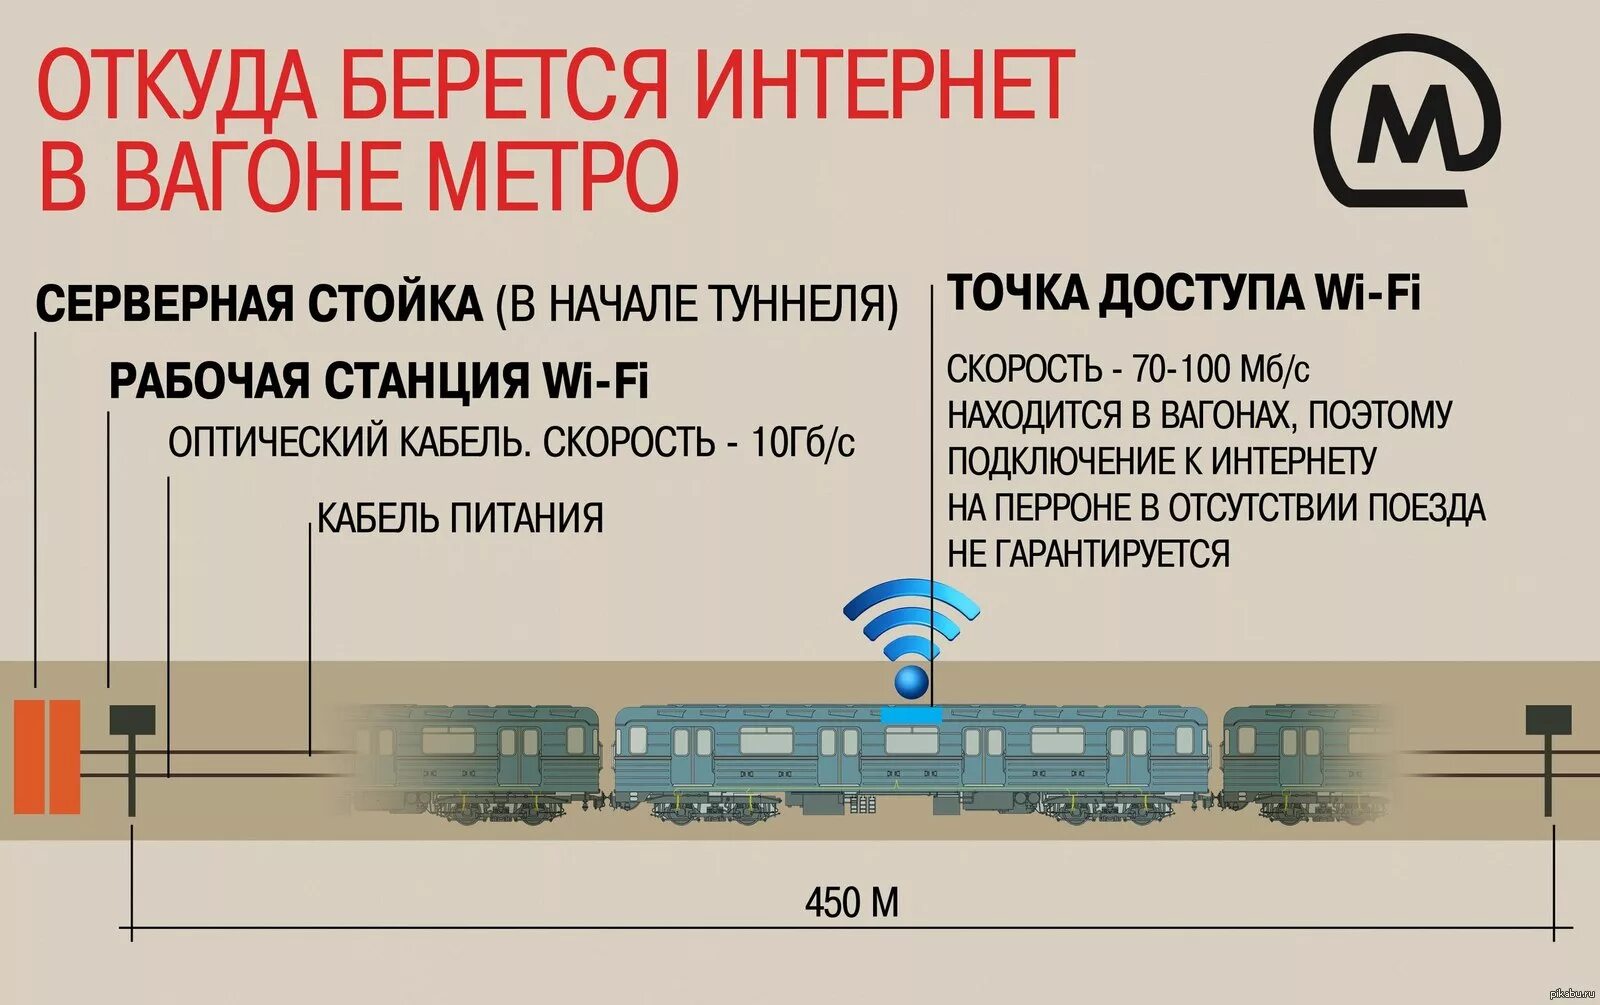 Интернет в метро. Wi-Fi в метро. Инфографика вагон метро. Инфографика вагон Московского метро. Откуда идет интернет